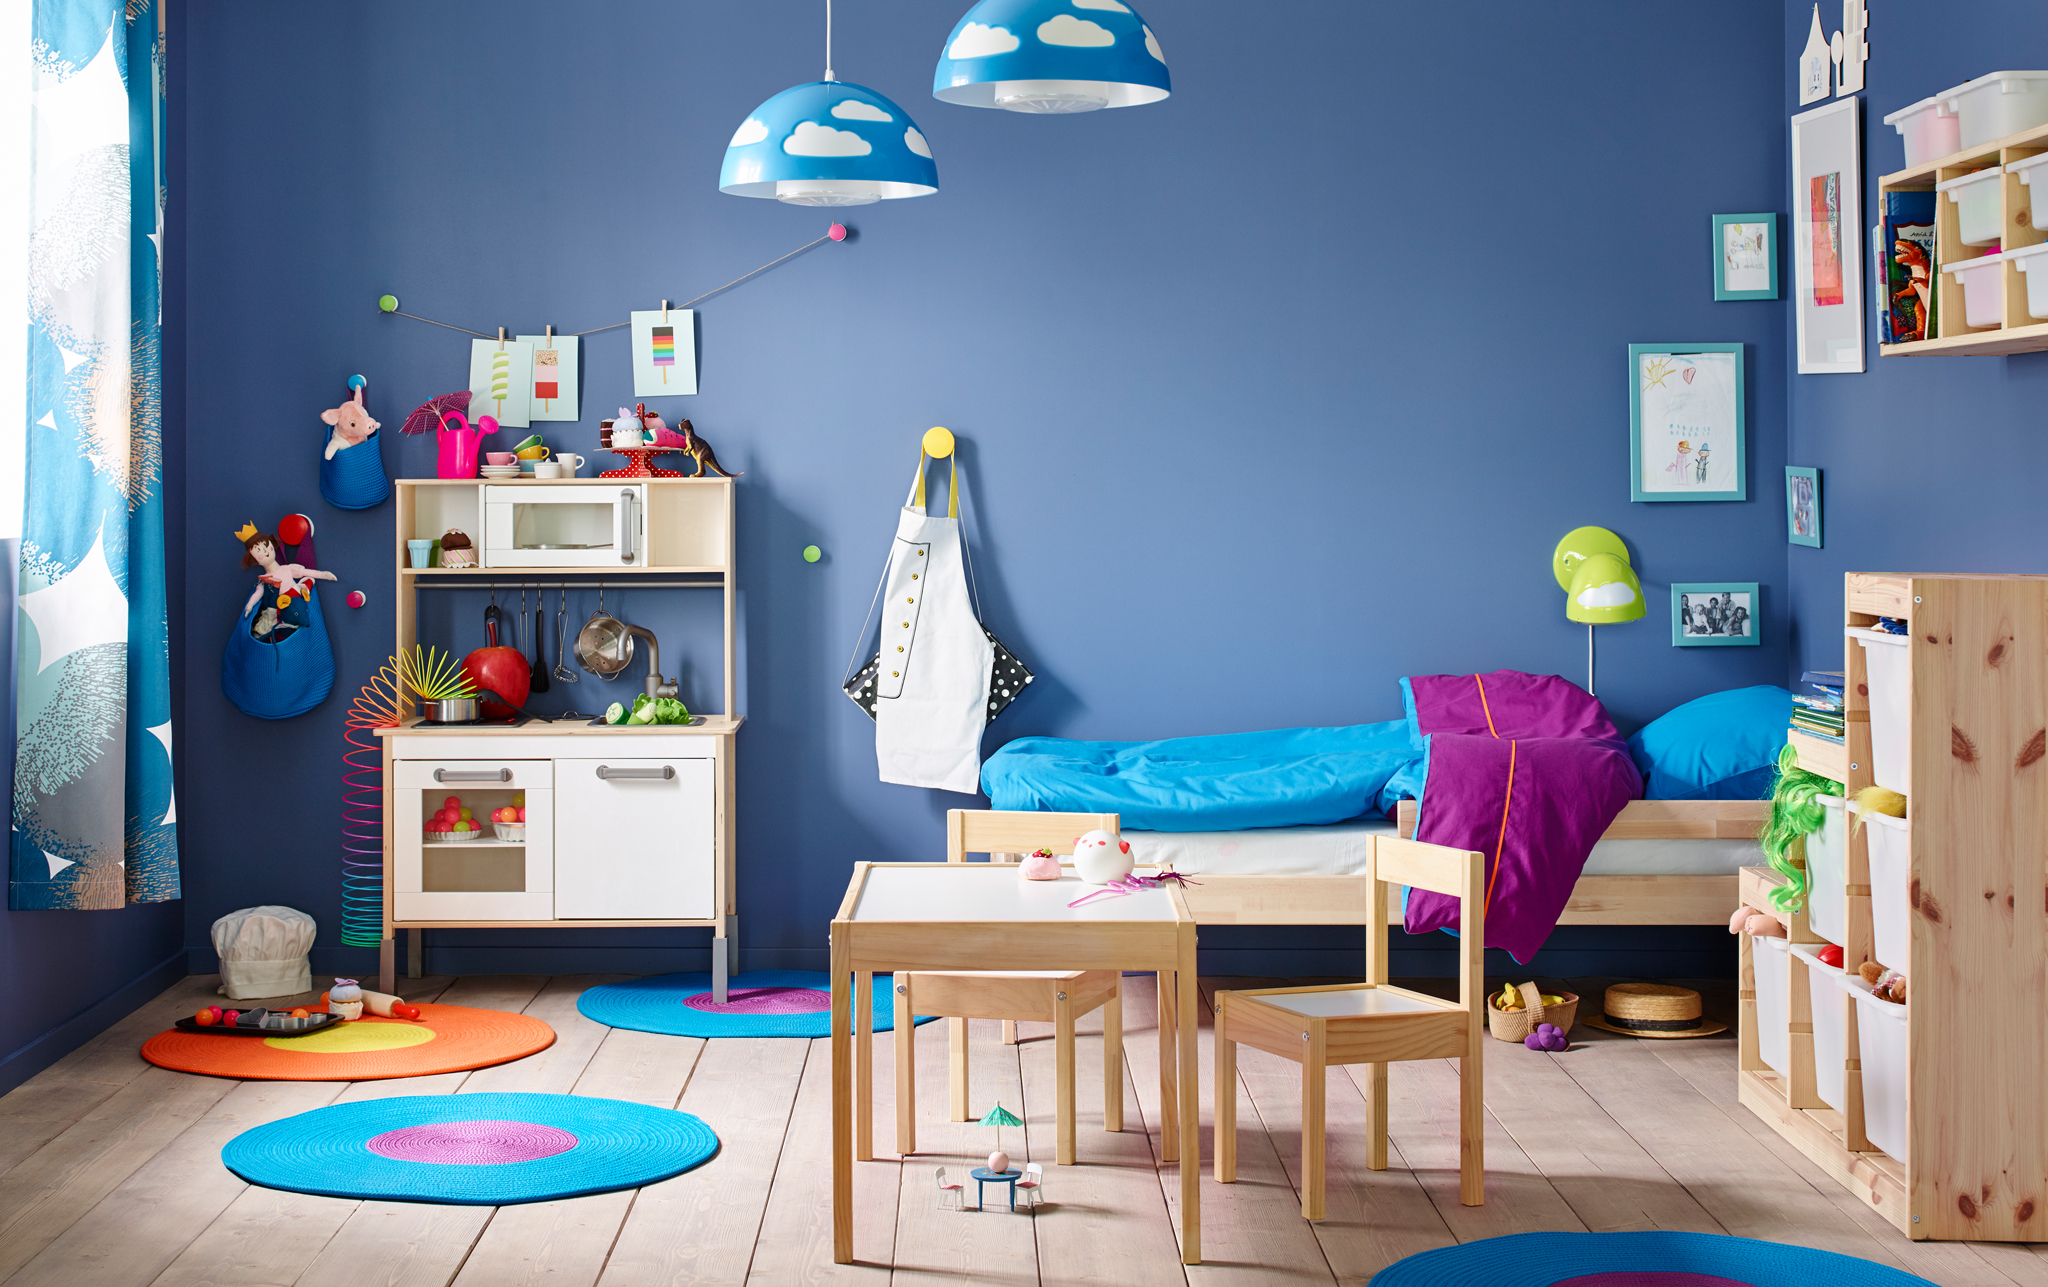 Small Kids Rooms: 14 Space-Saving Design Ideas